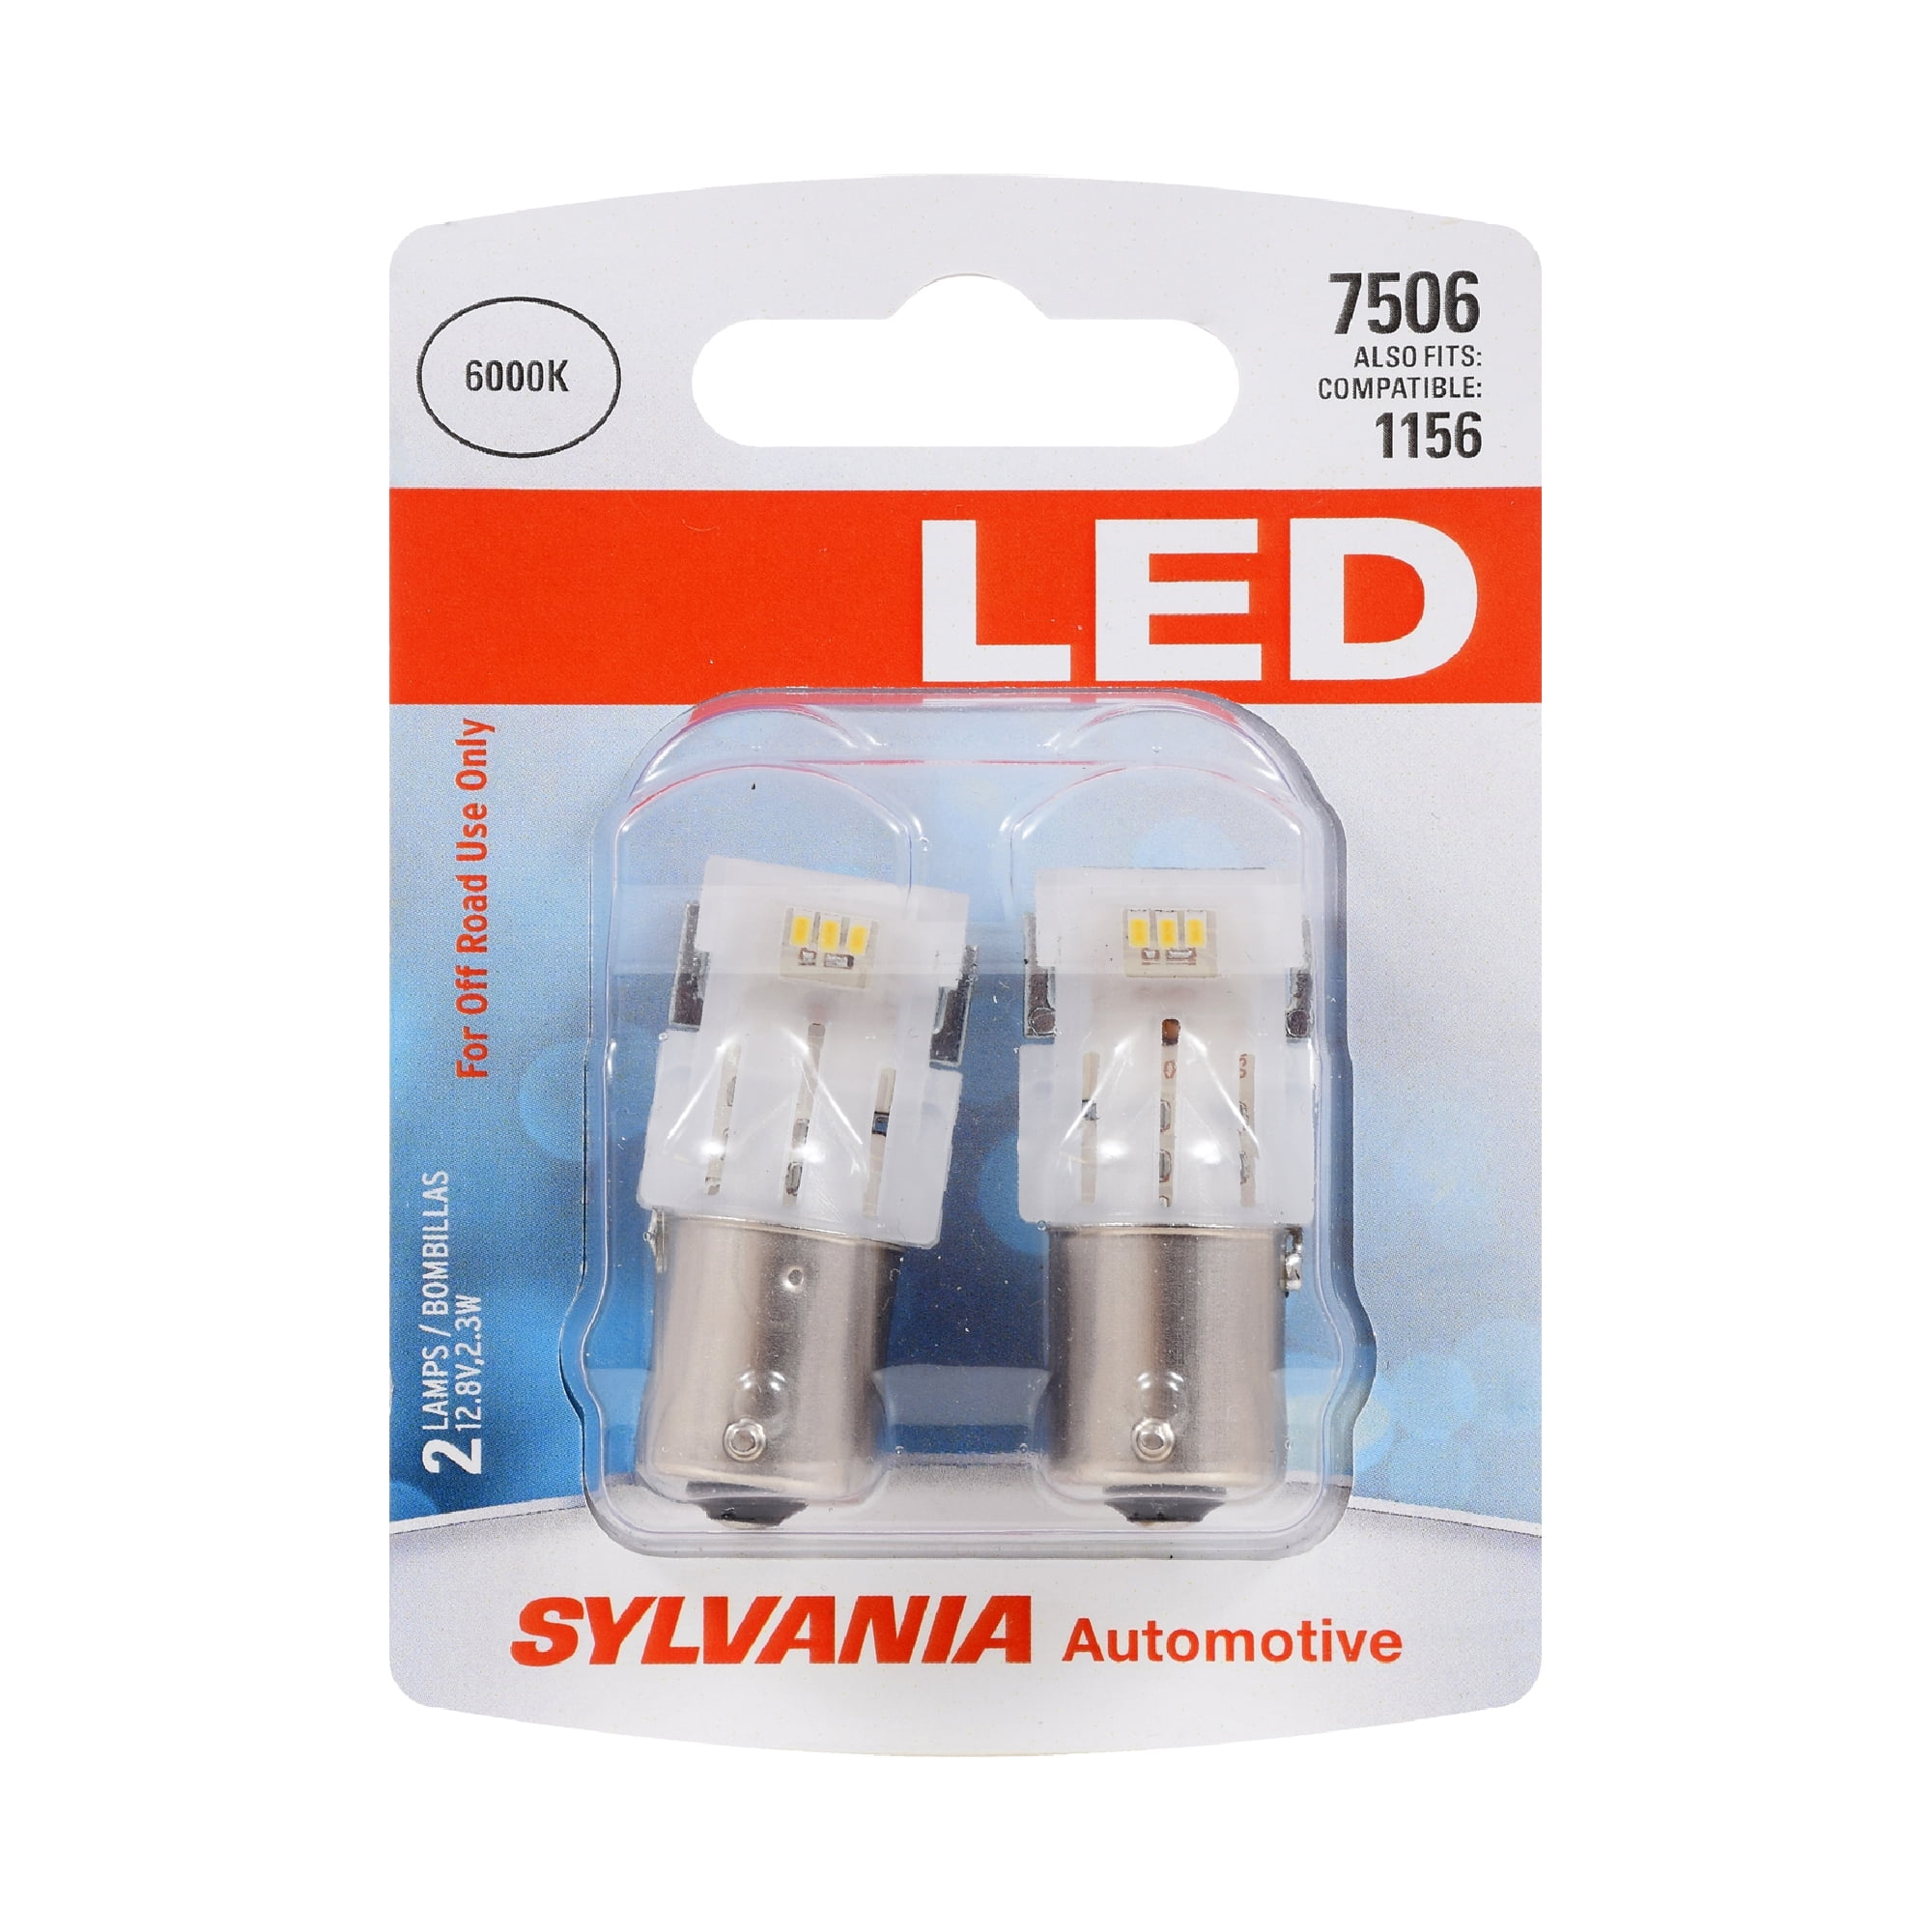 Sylvania 7506 LED White Mini Automotive Bulbs, Pack of 2.